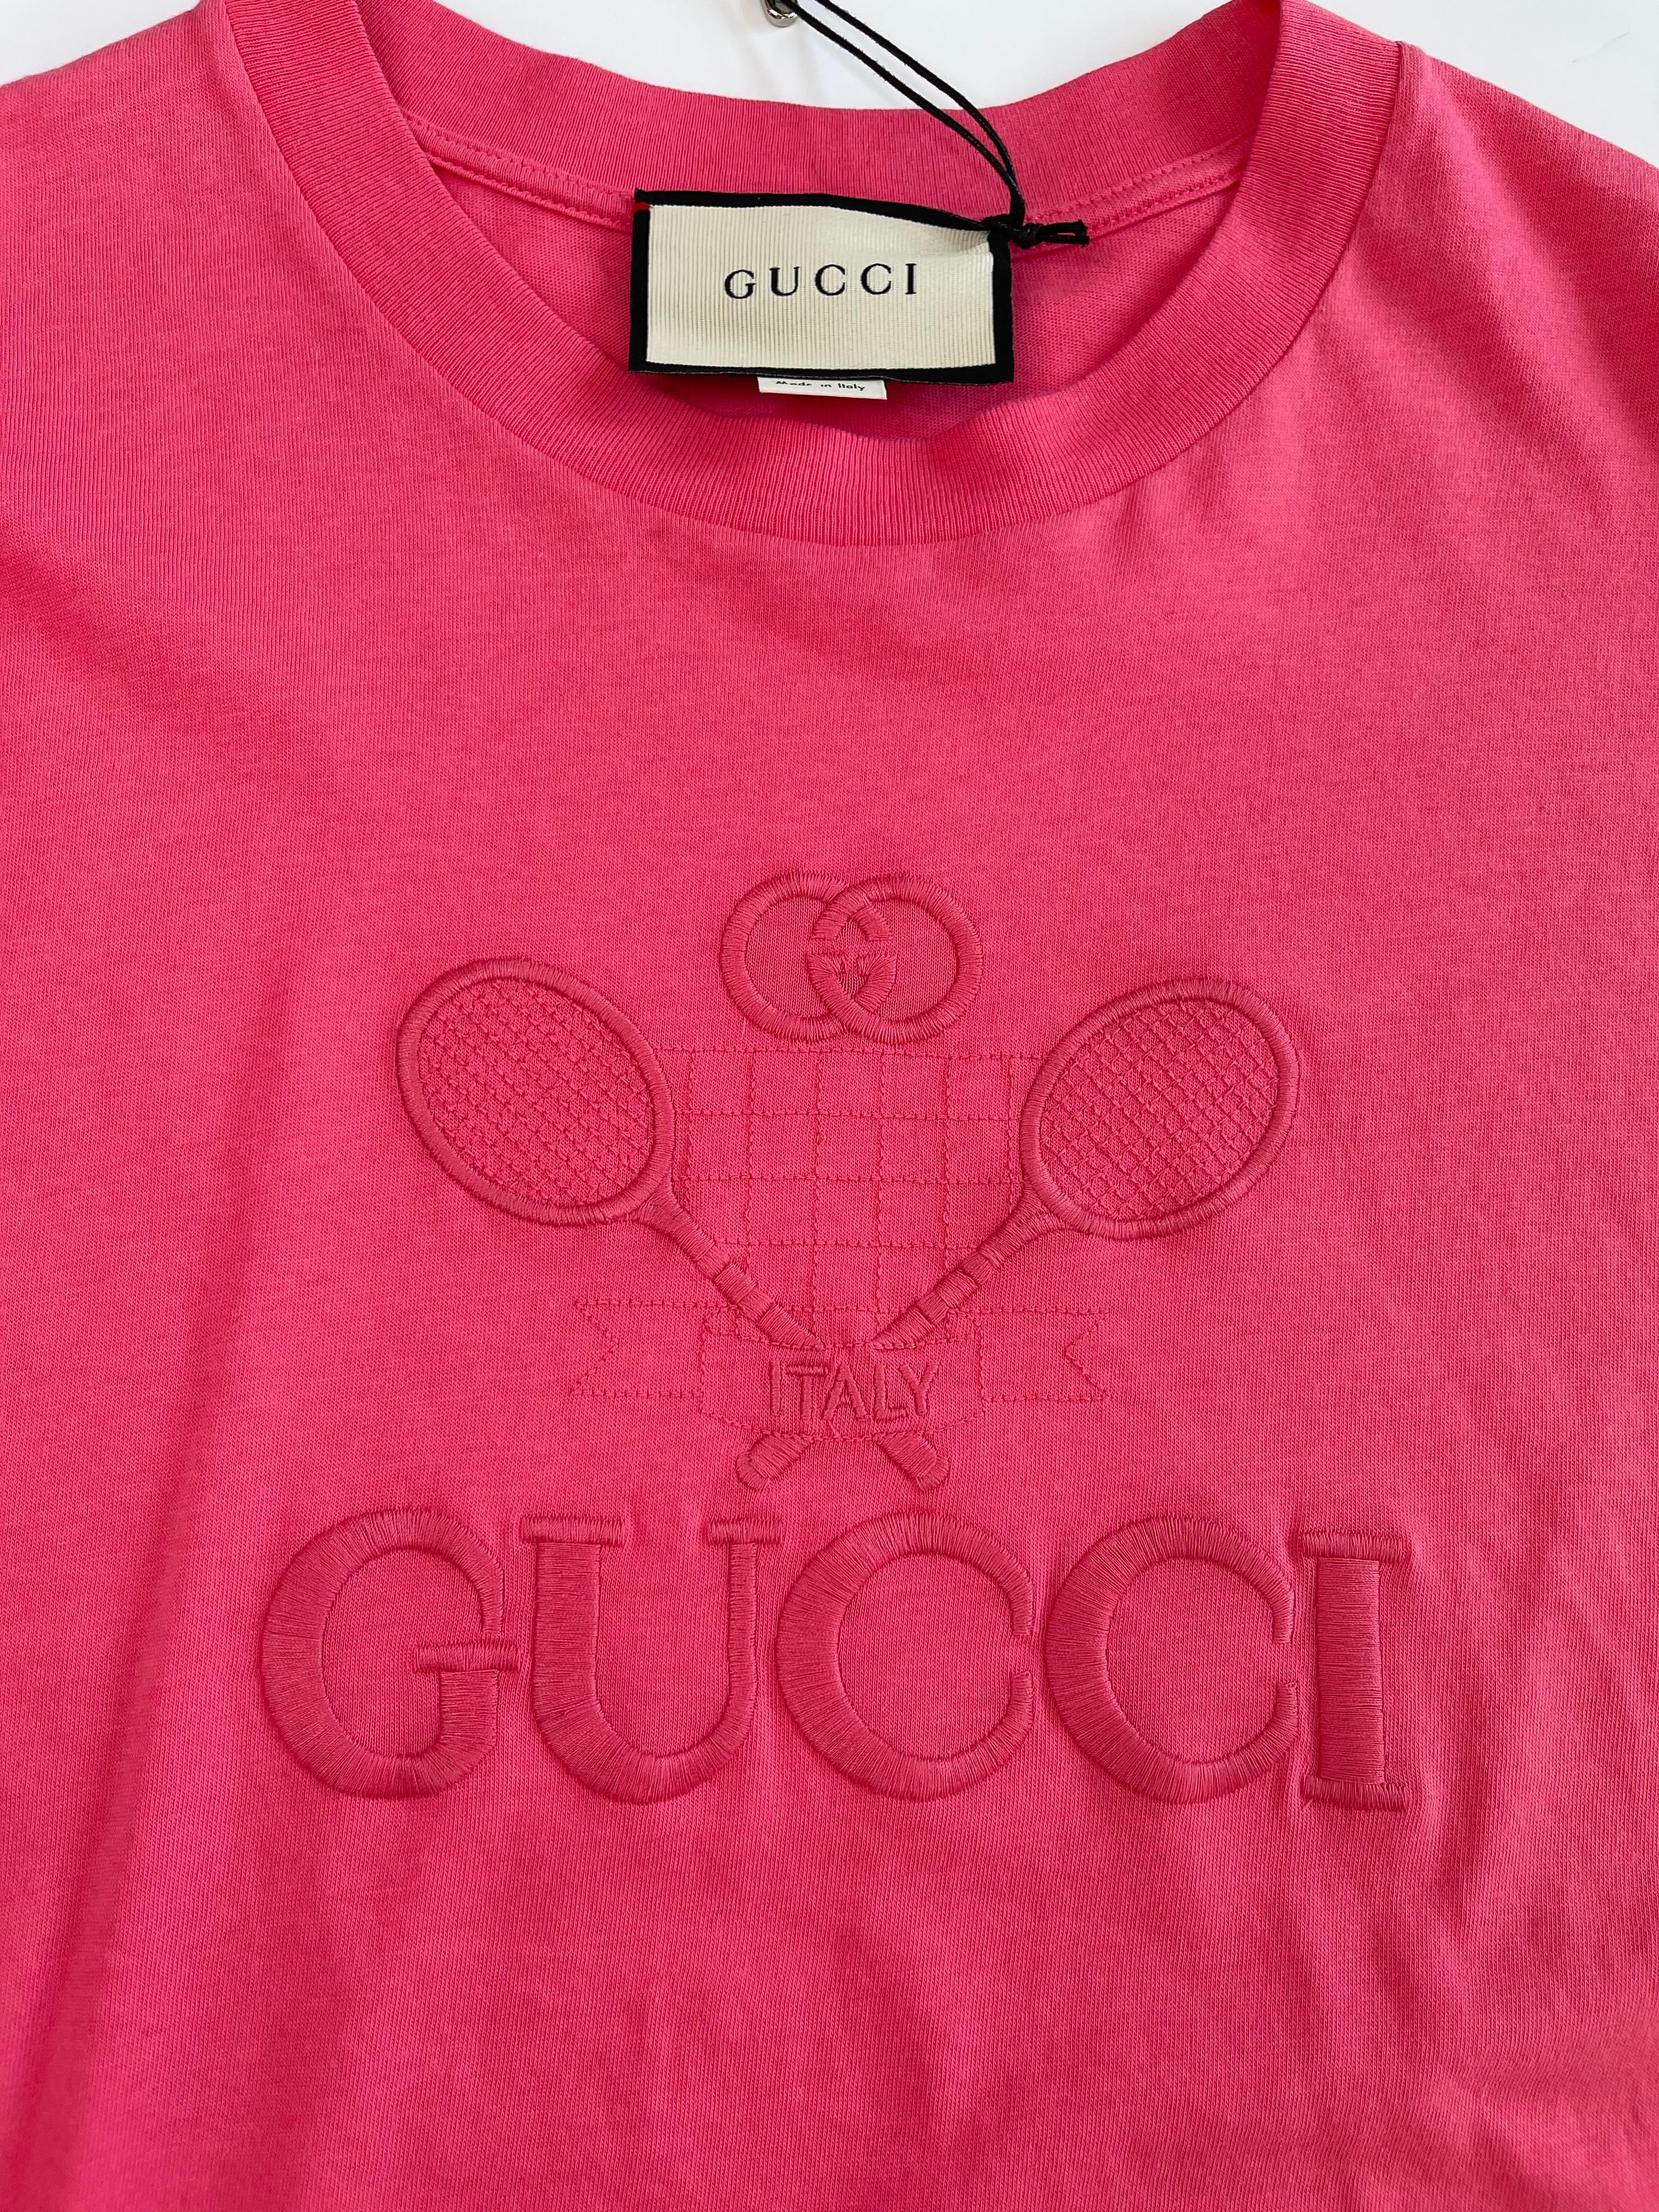 Women's Gucci GG Tennis Pink Cotton Logo T-Shirt - Small (580968)